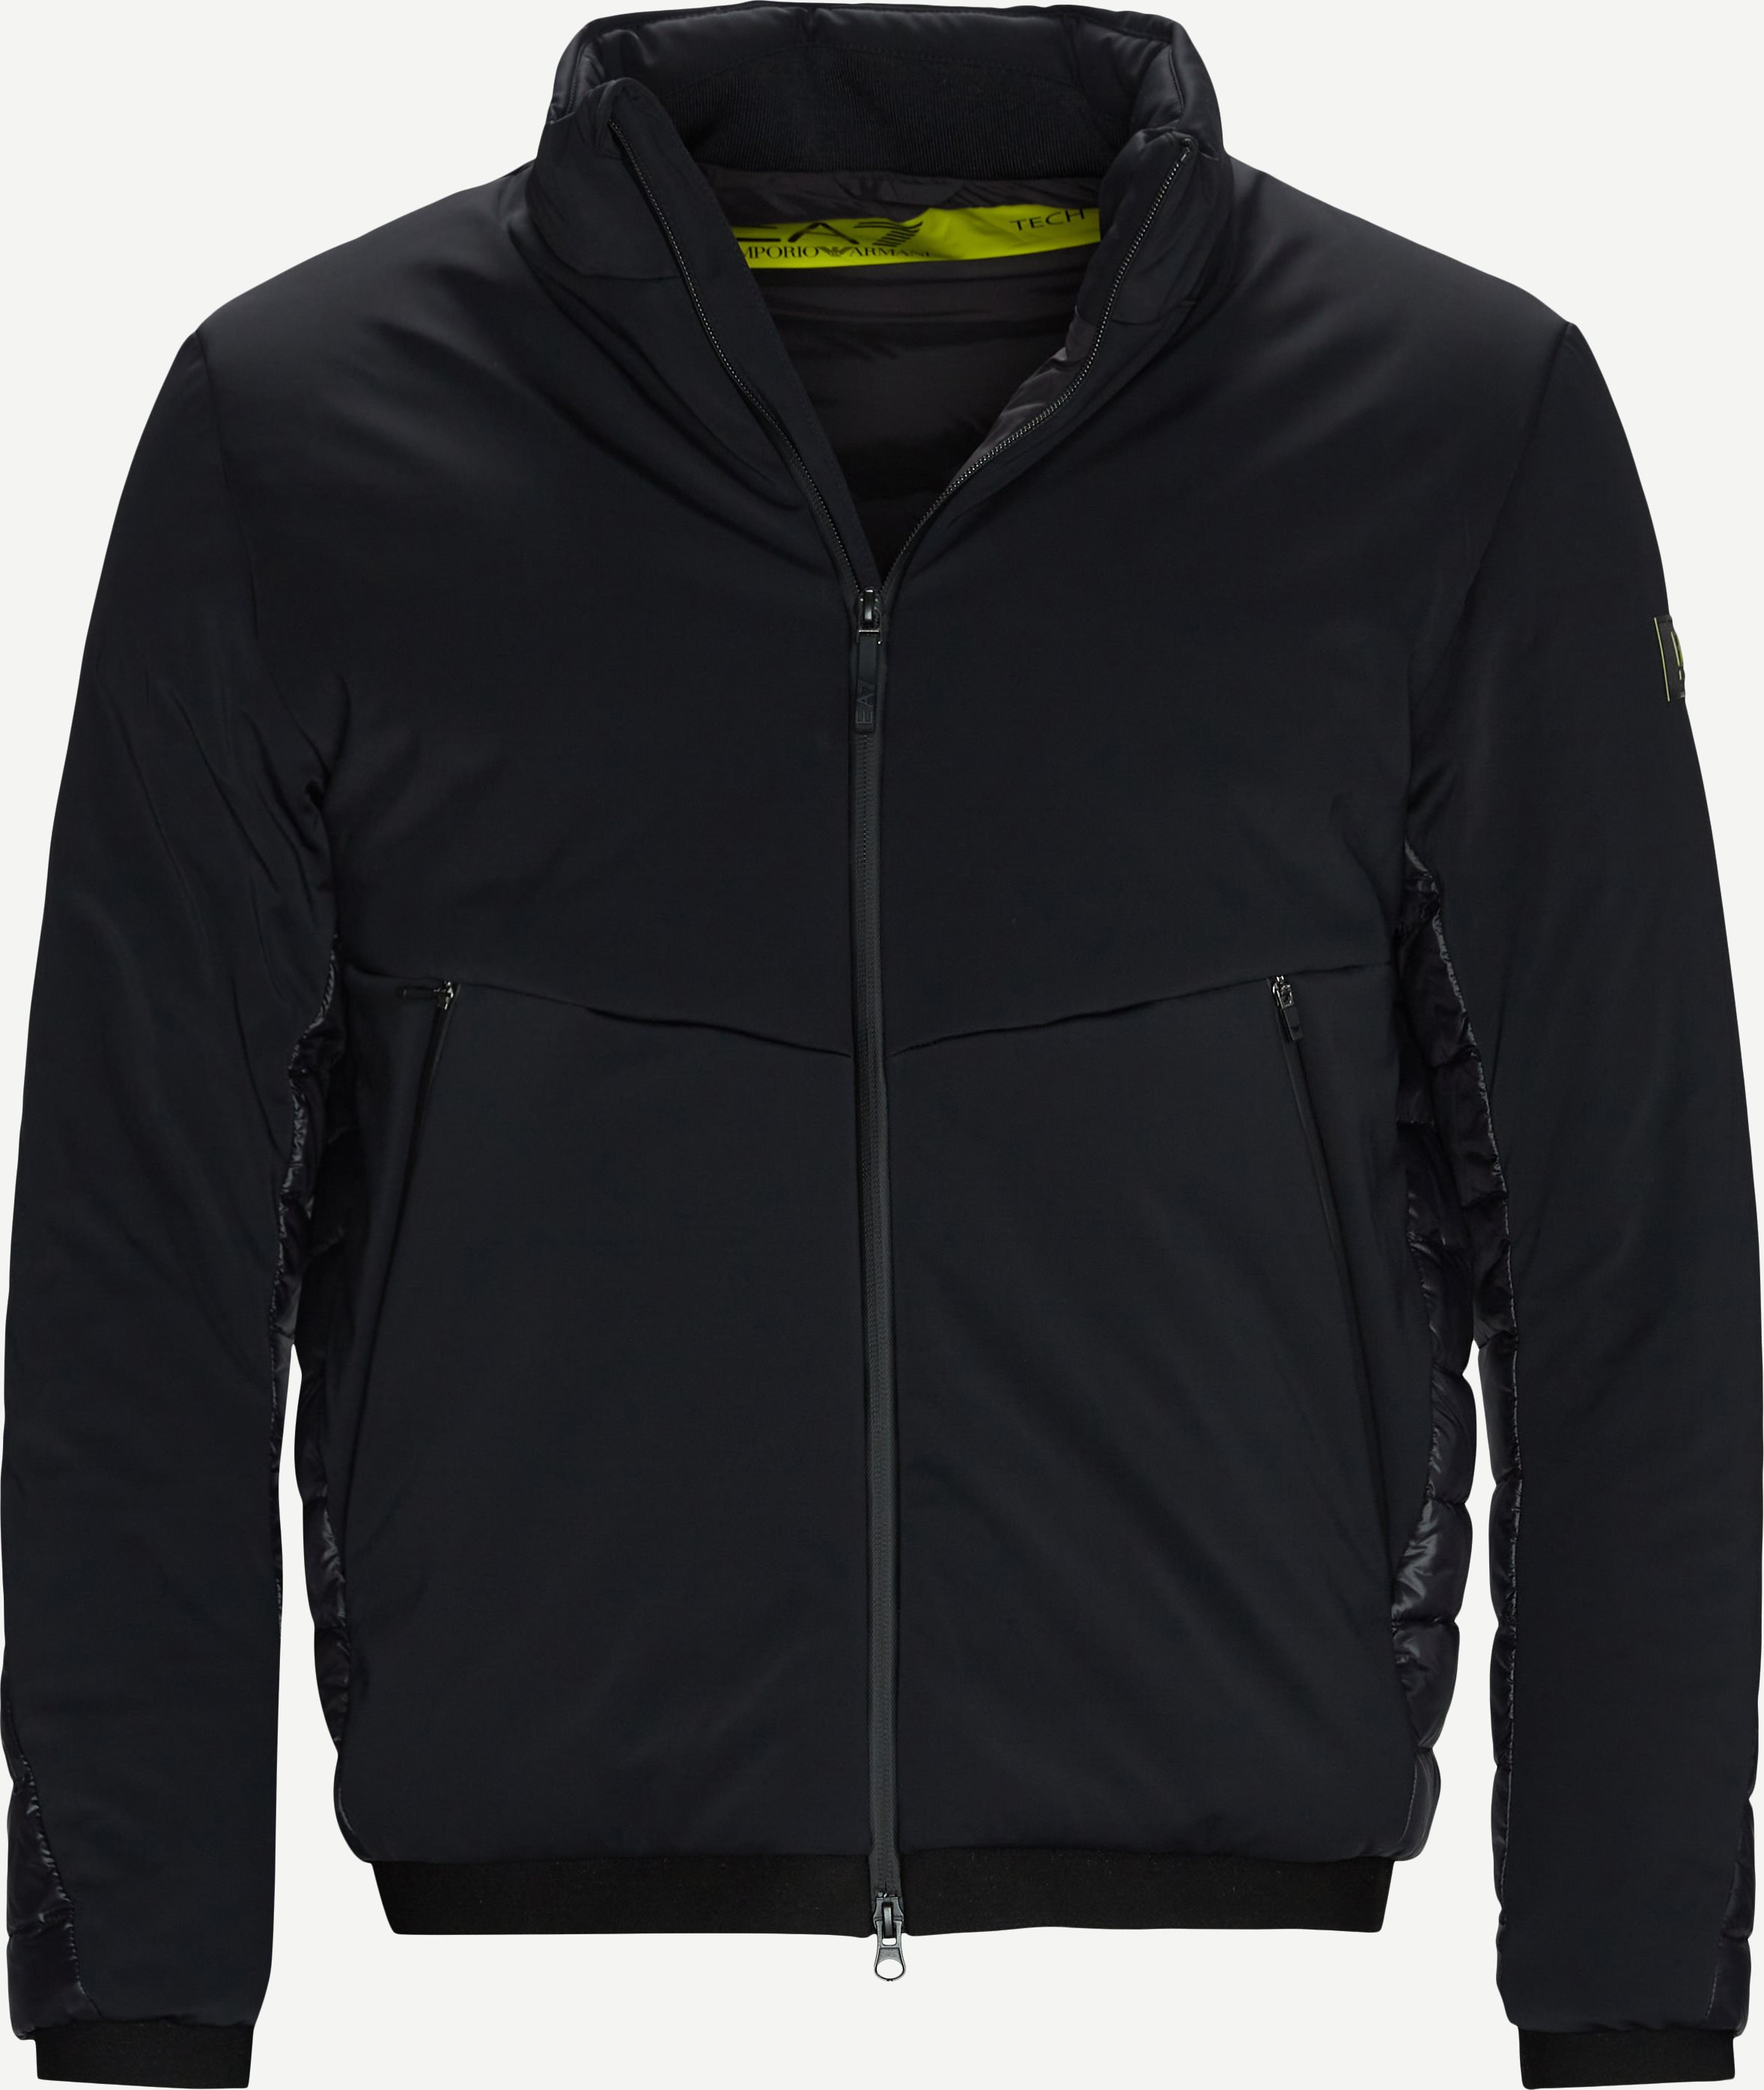 6KPB27 Winter jacket - Jackets - Regular fit - Black